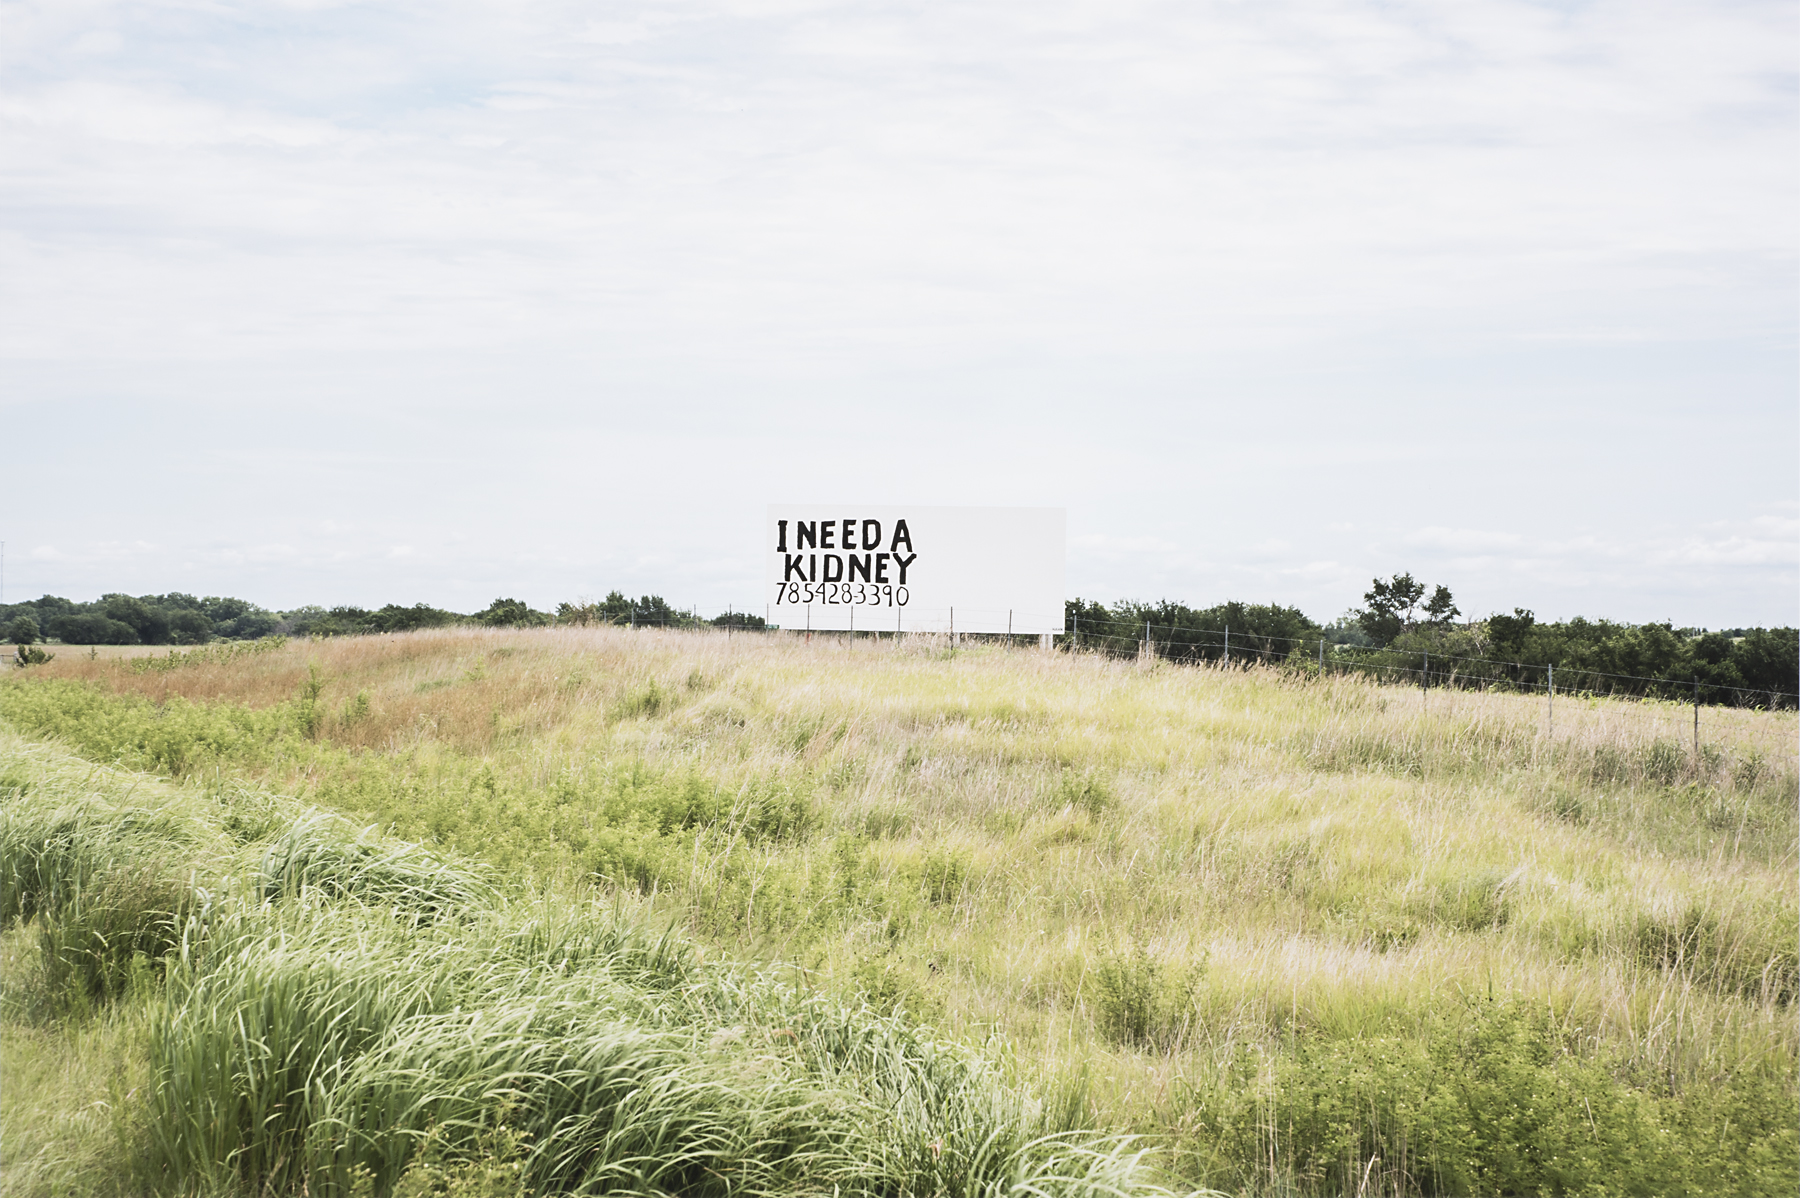 Repurposed billboard west of Salina, Kansas along I-70 7/13/2014 – 1:40PM